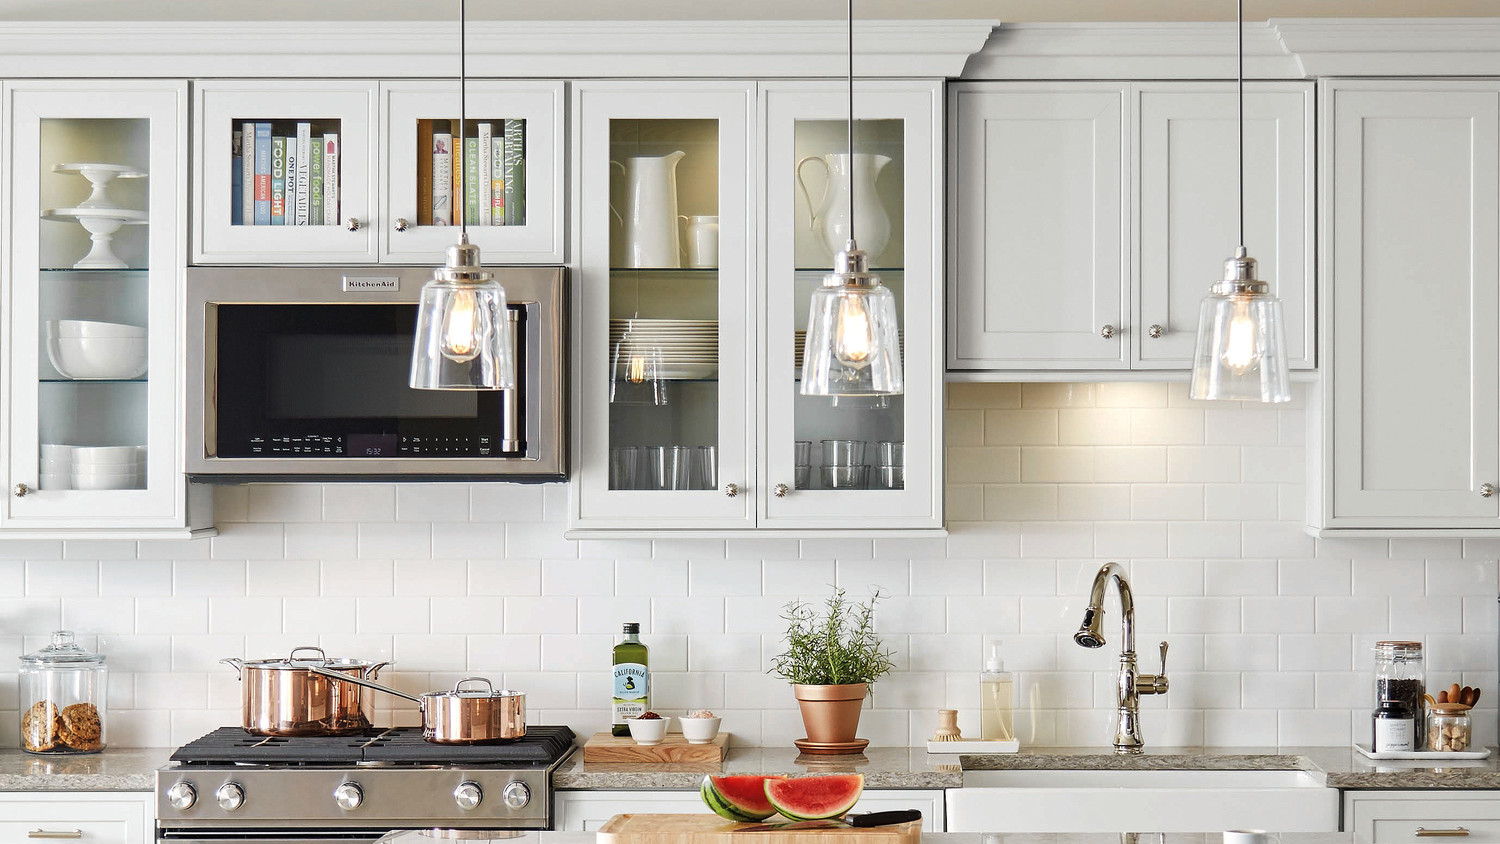 How To Paint Kitchen Cabinets Martha Stewart